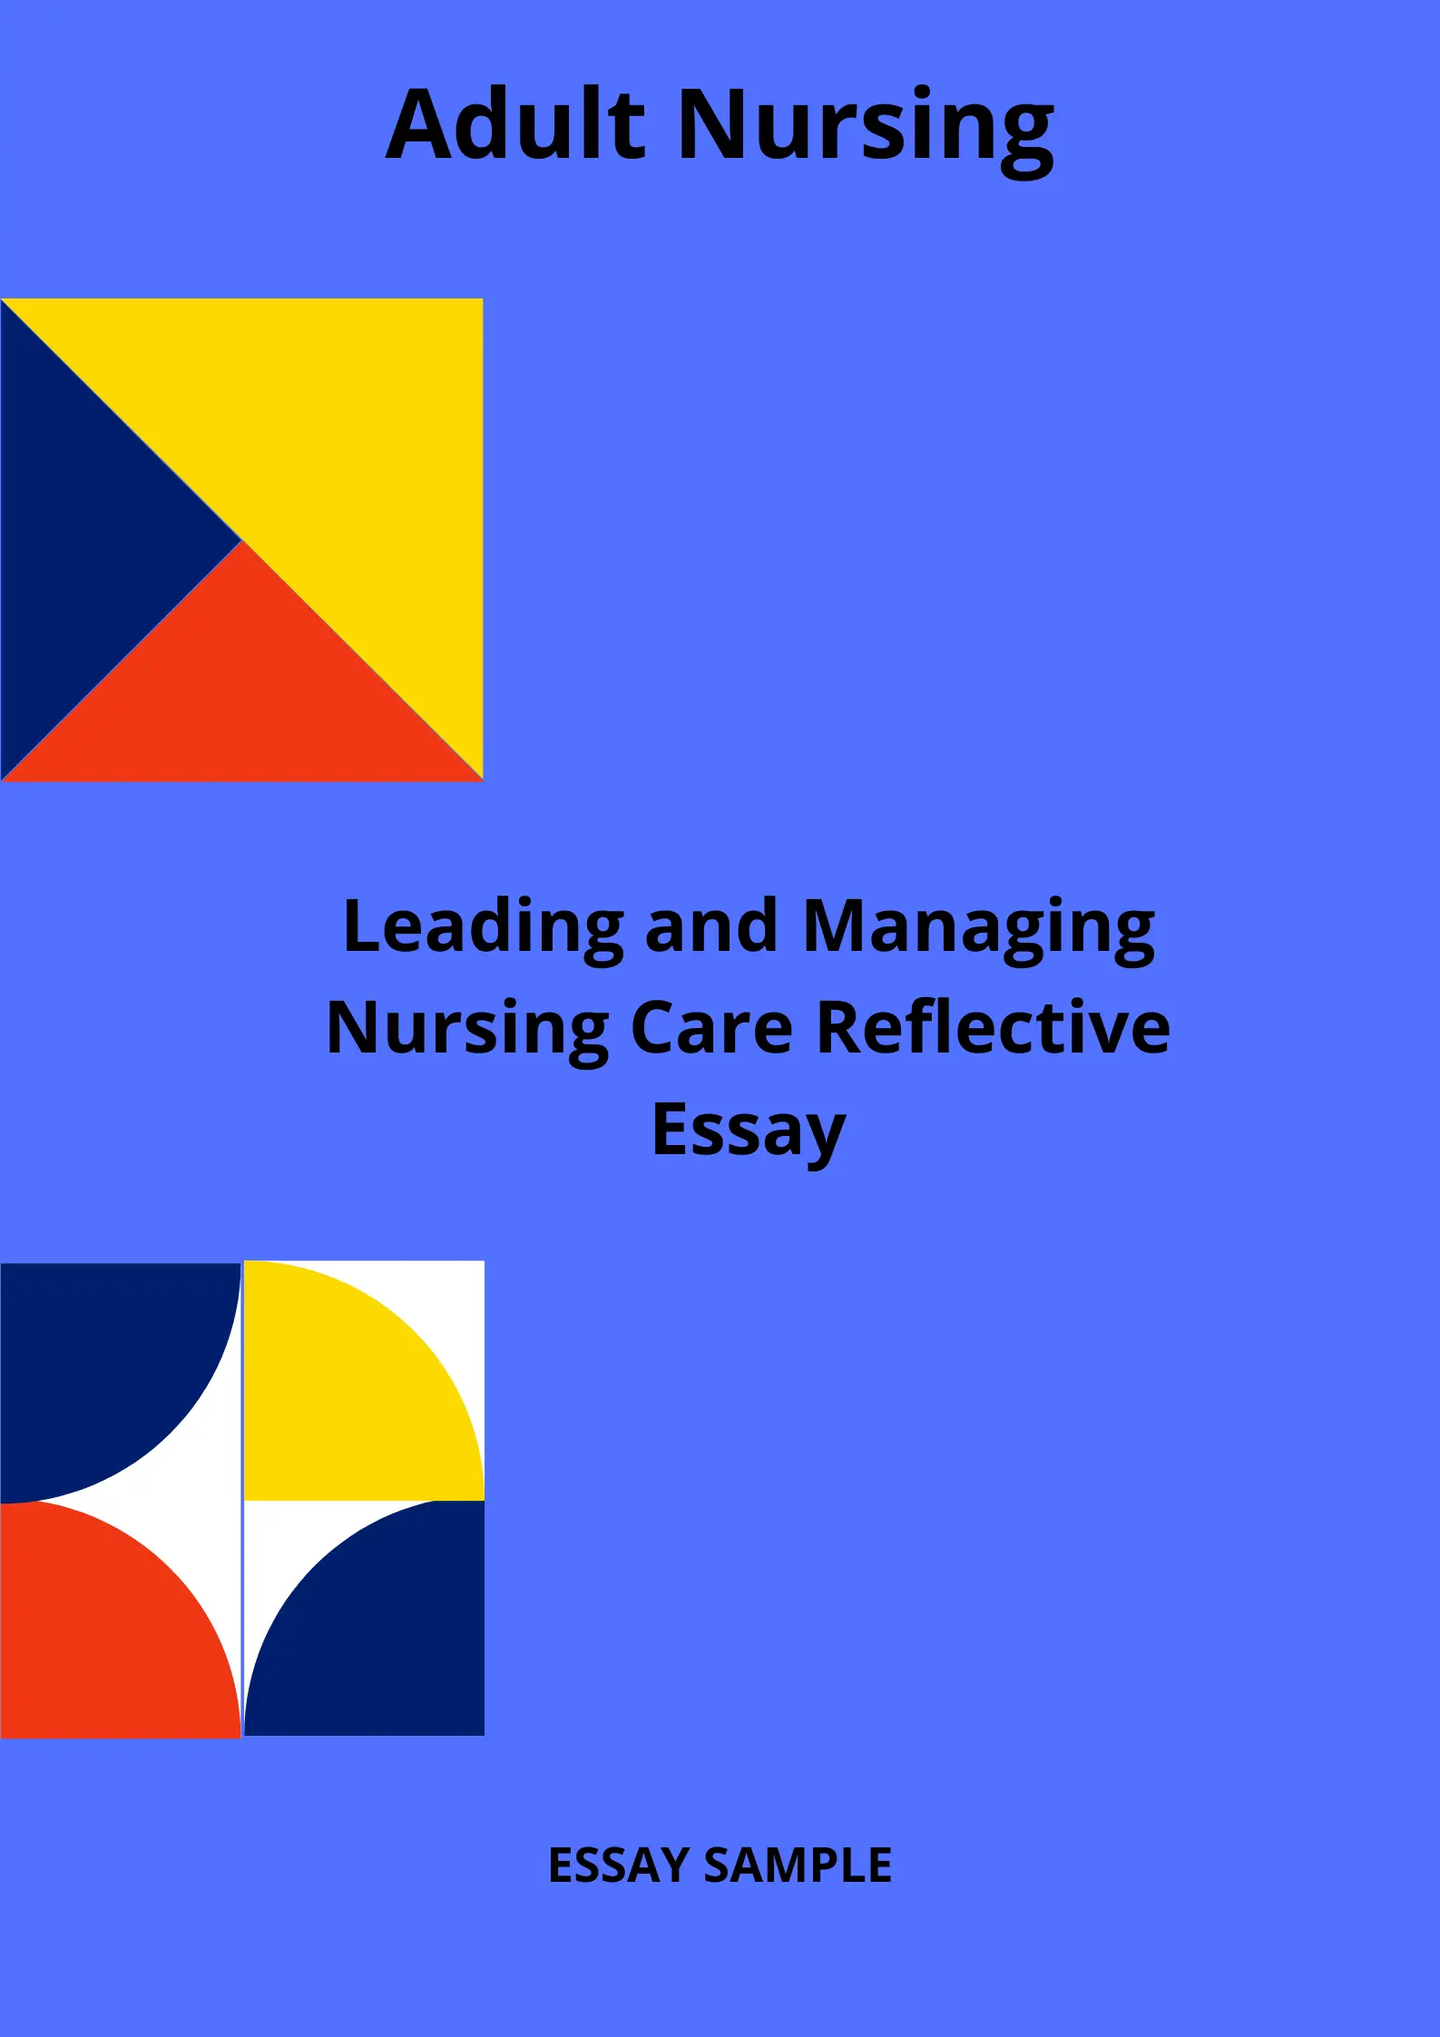 Leading and Managing Nursing Care Reflective Essay Sample for Adult Nursing